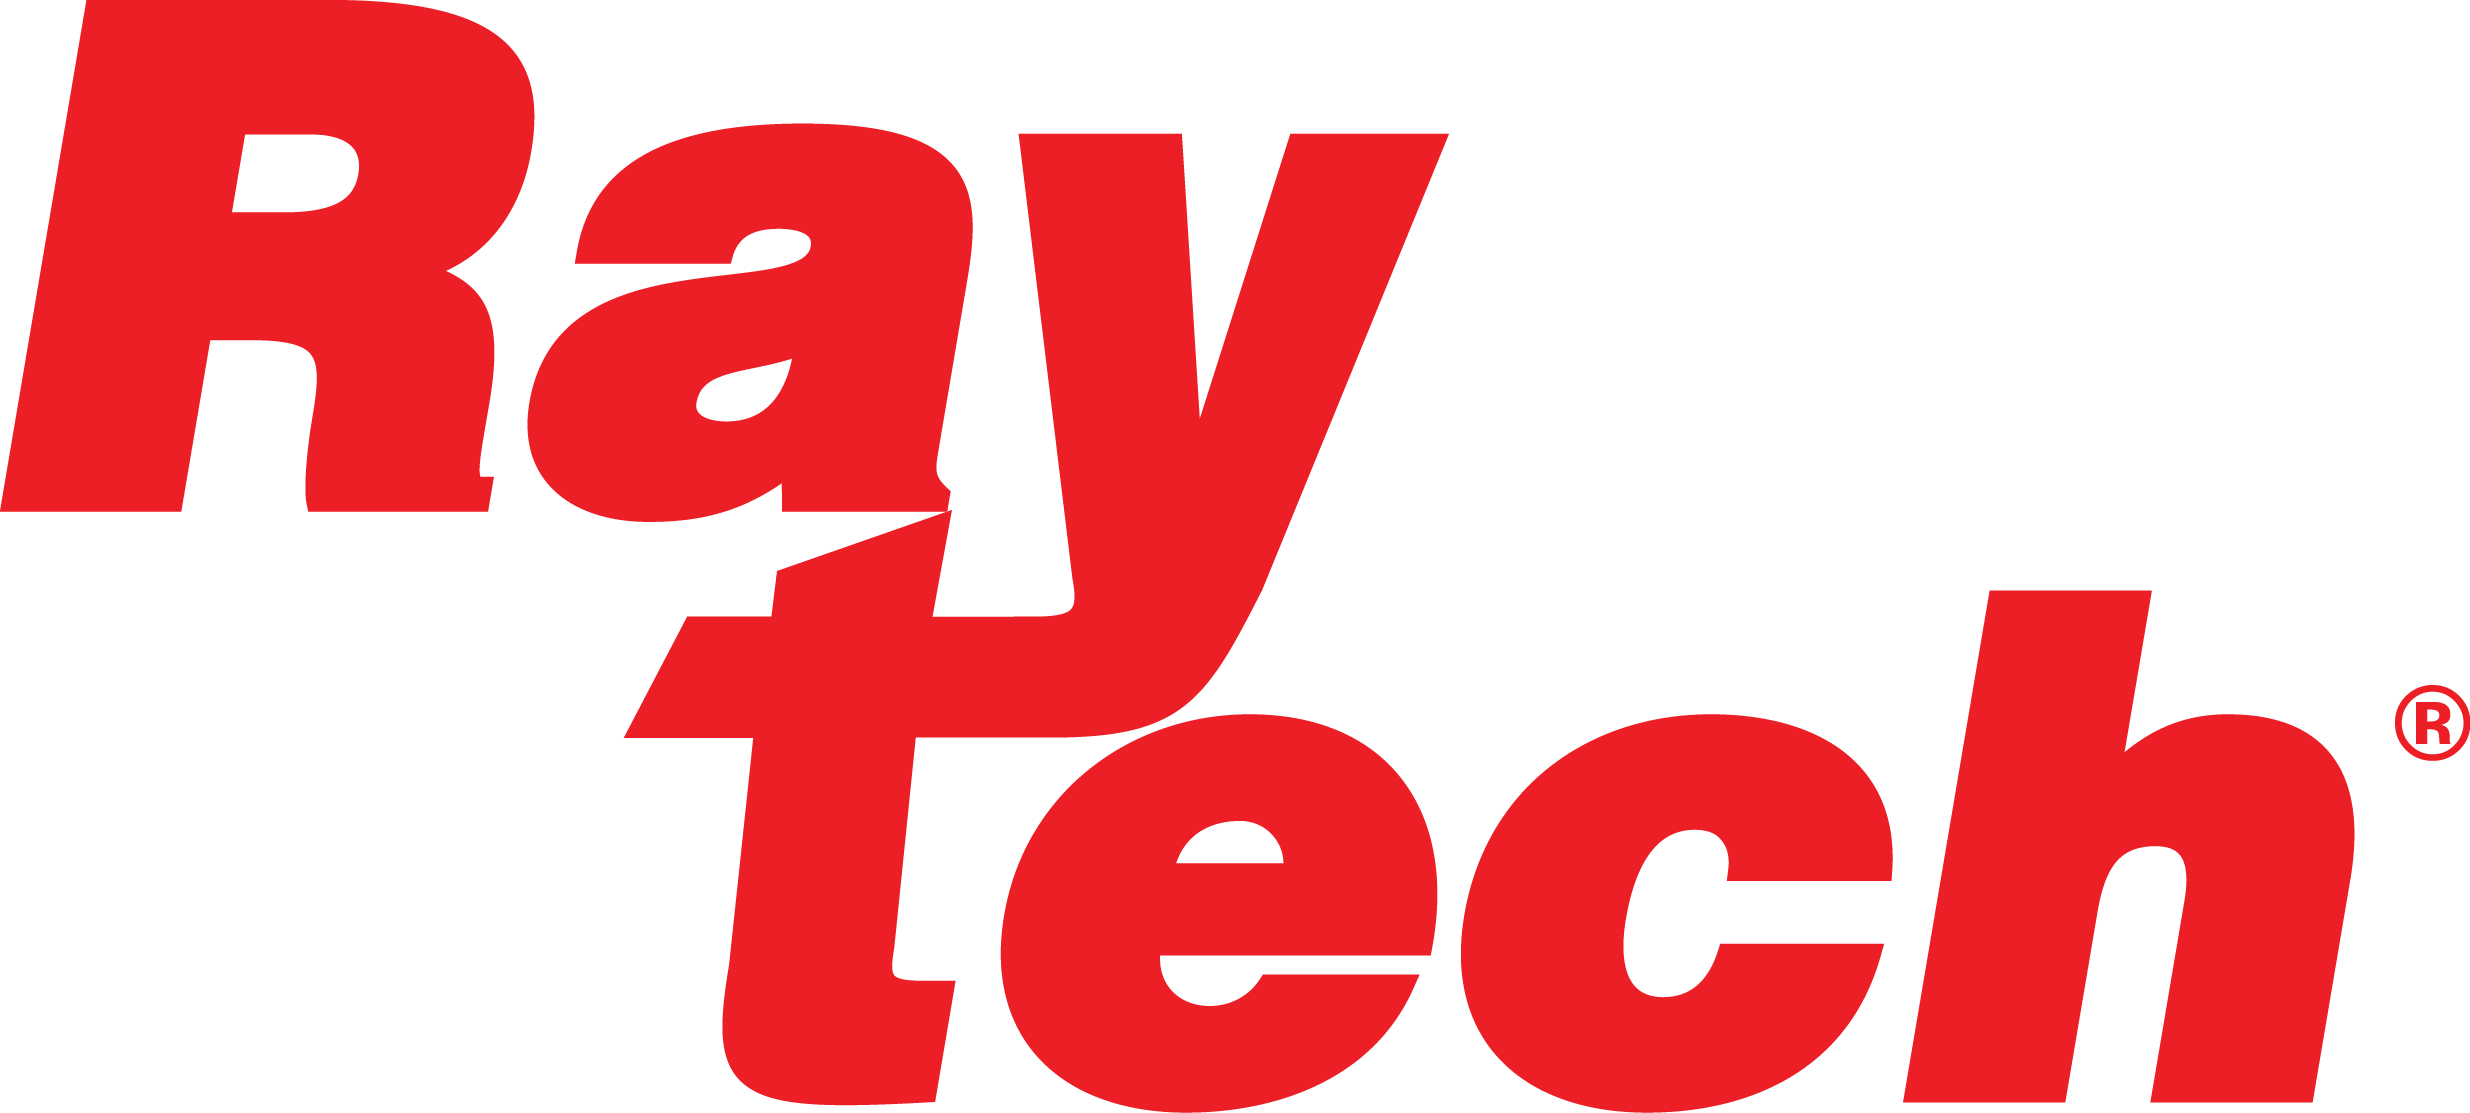 Raytech logo20181019 2735 r0lppt